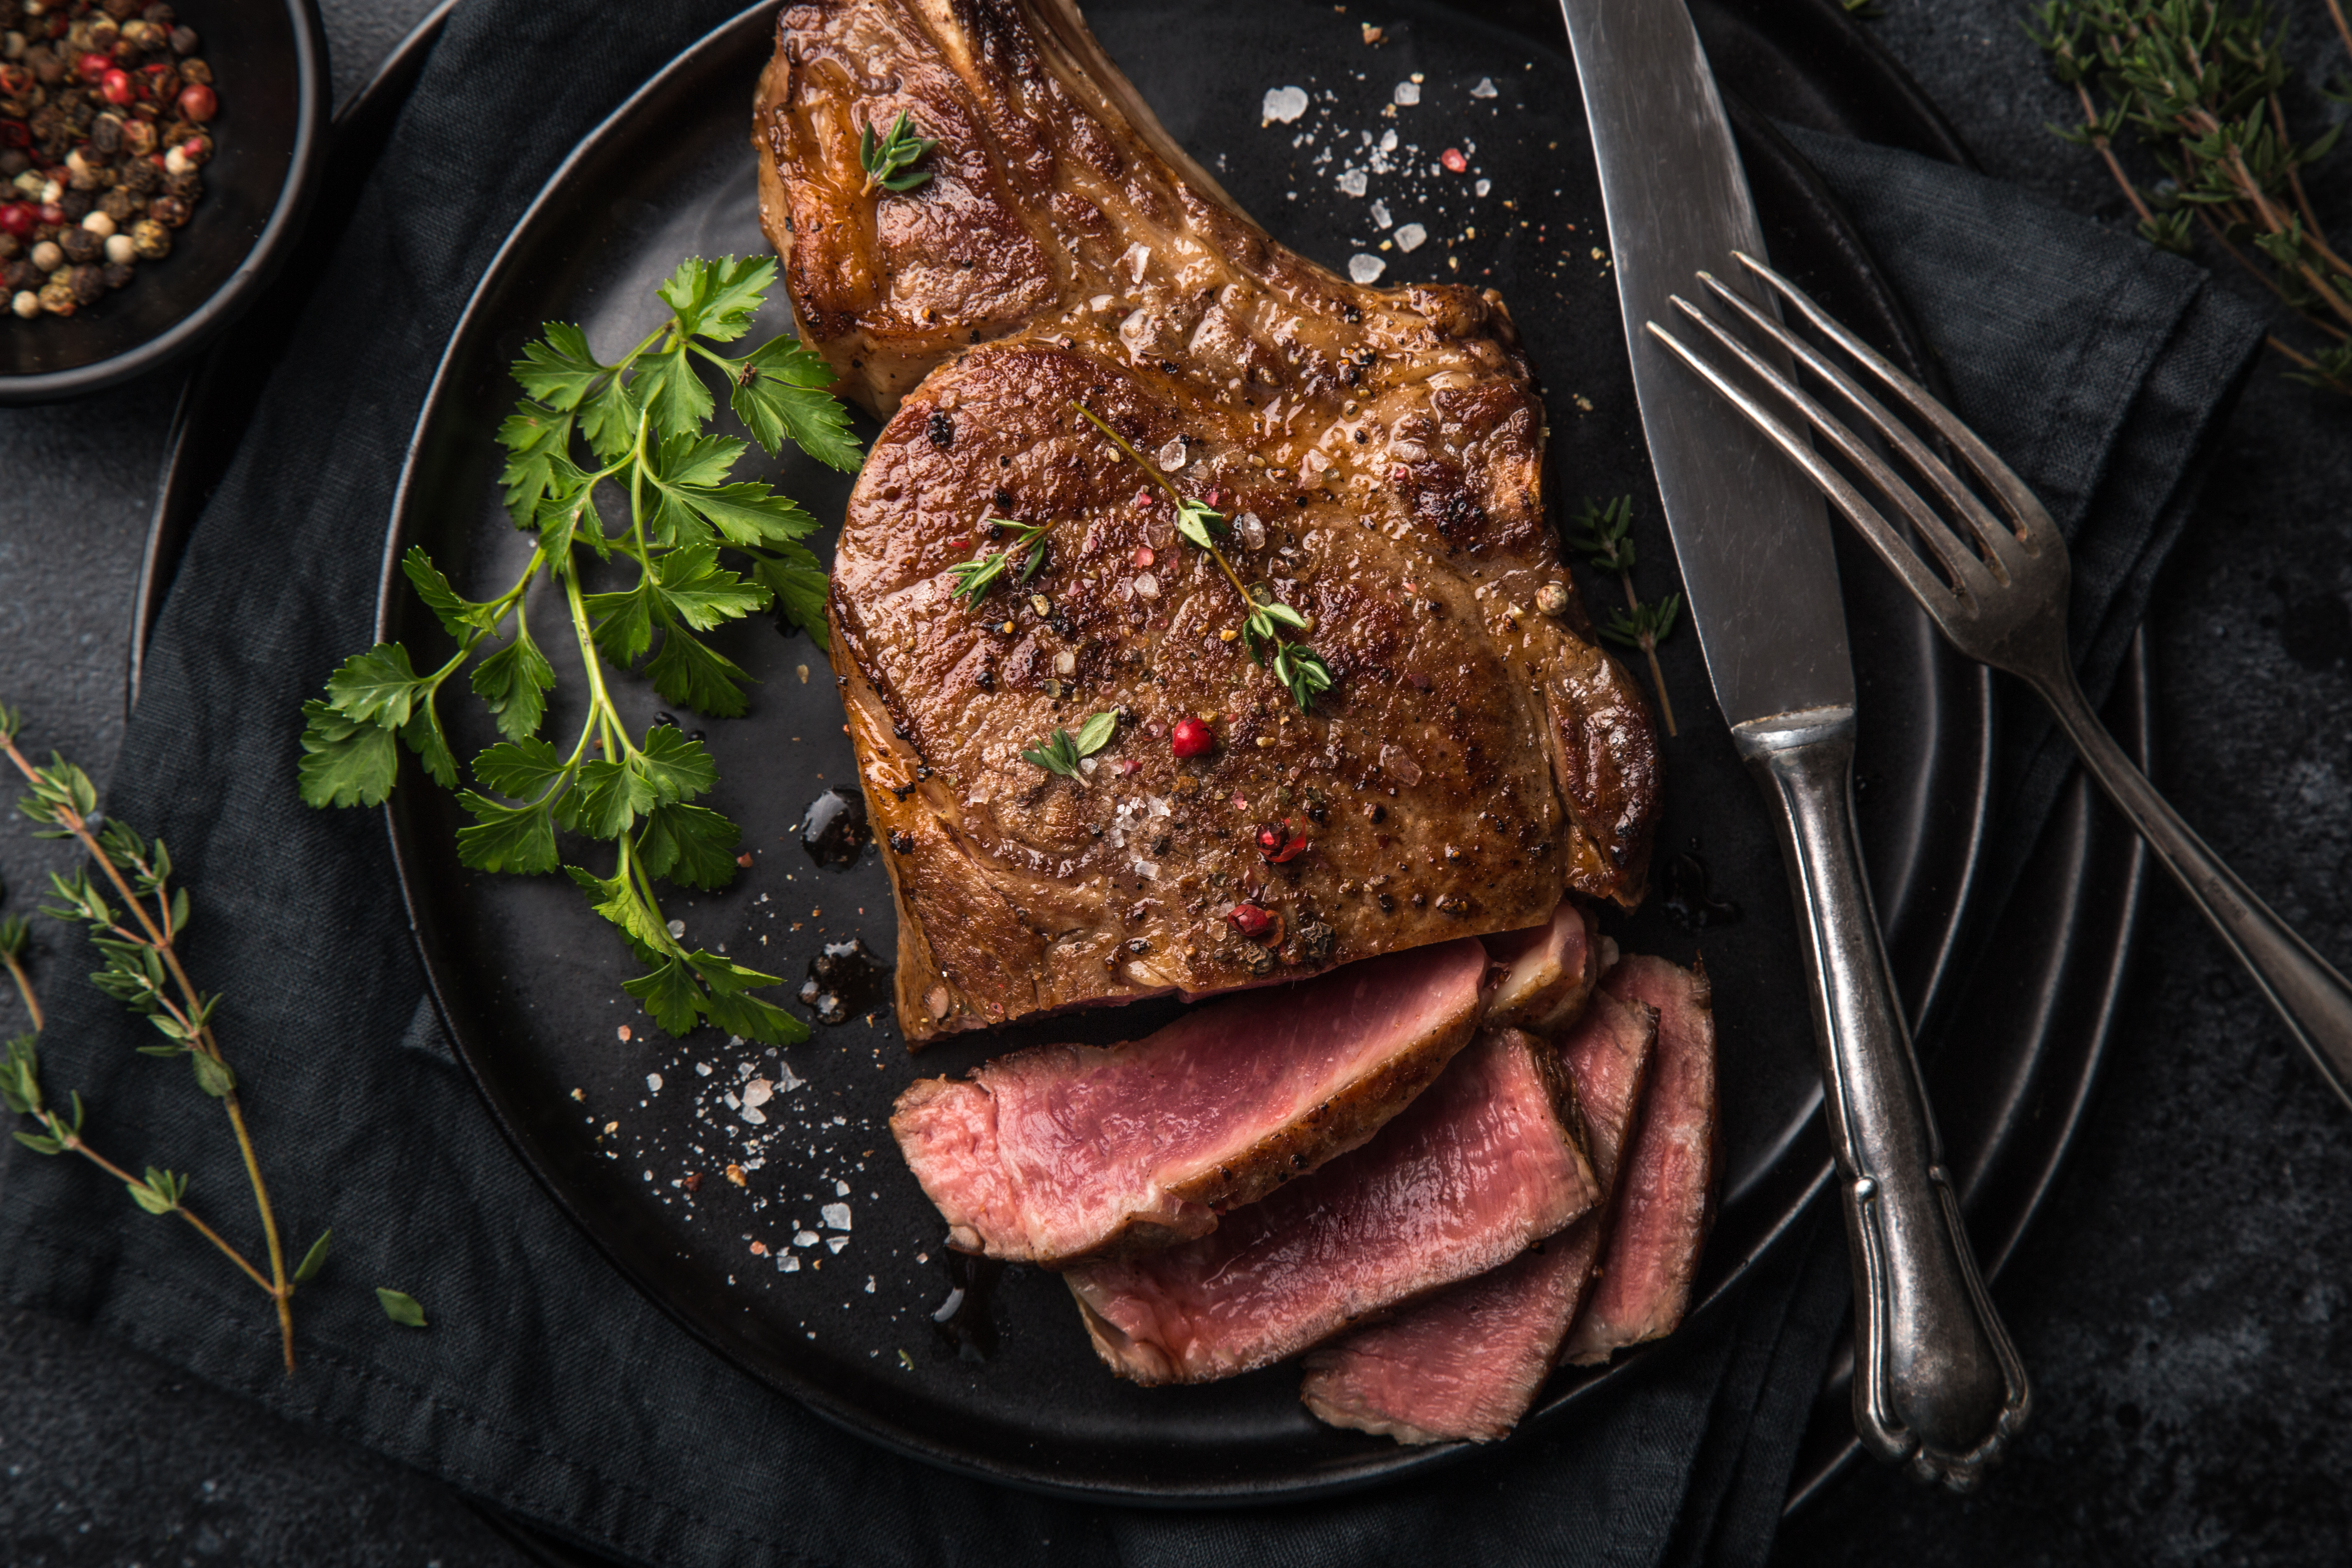 https://www.aussiebeefandlamb.sg/siteassets/sliced-beef-steak-on-black-plate_247267280-1.jpeg